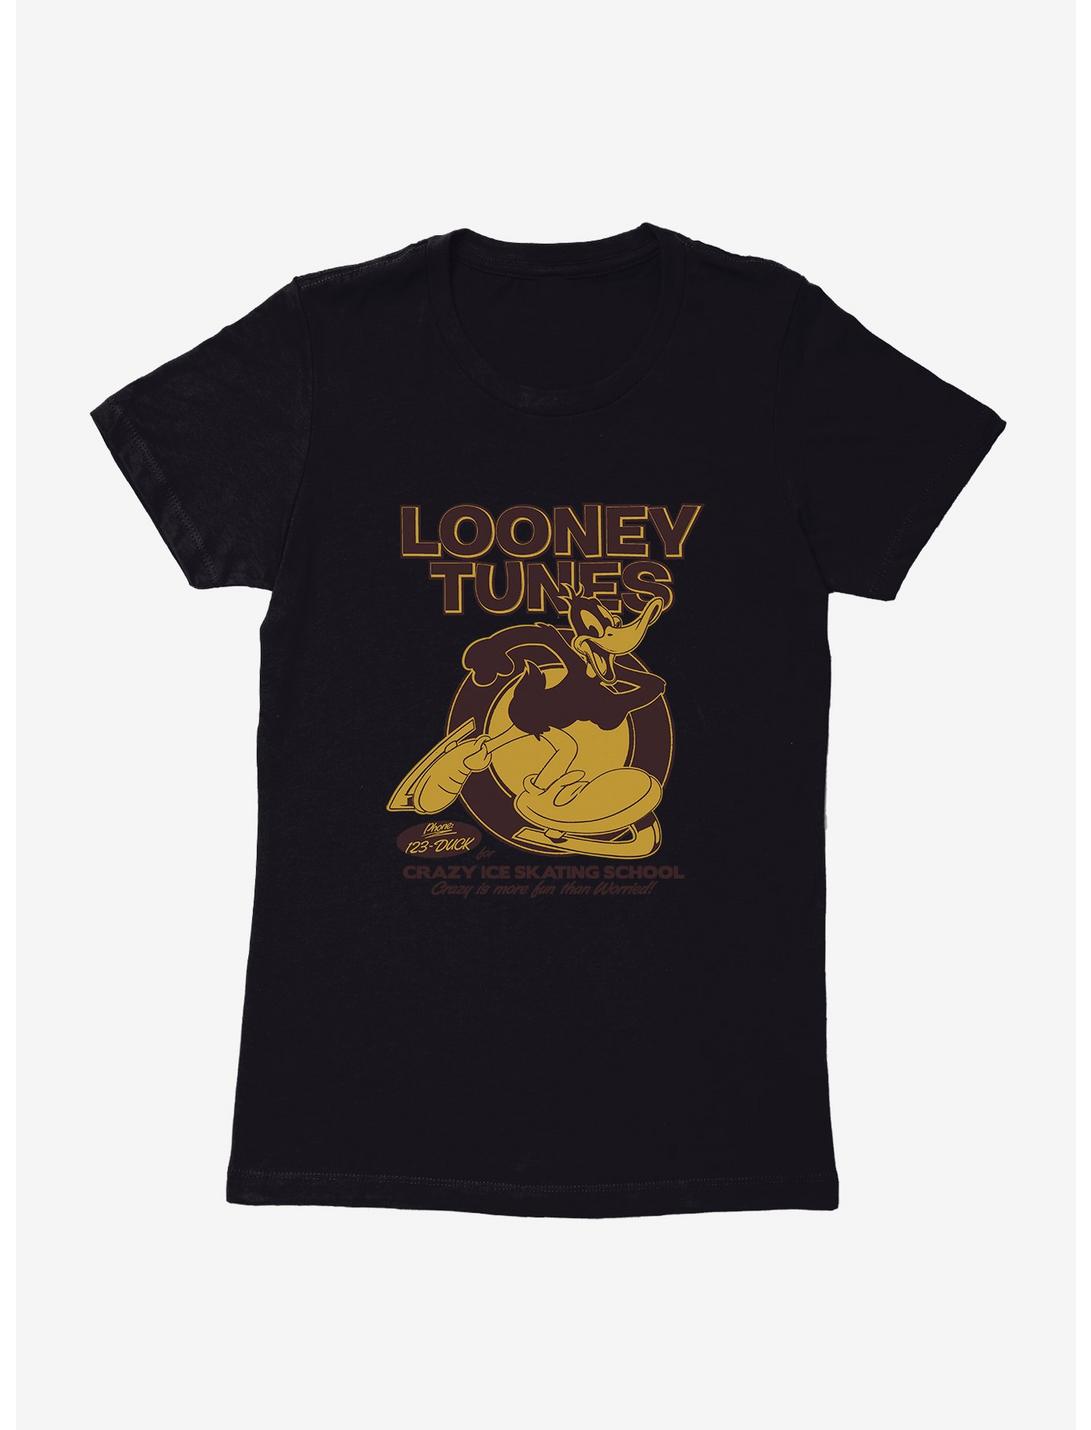 Looney Tunes Ice Skating School Womens T-Shirt, BLACK, hi-res